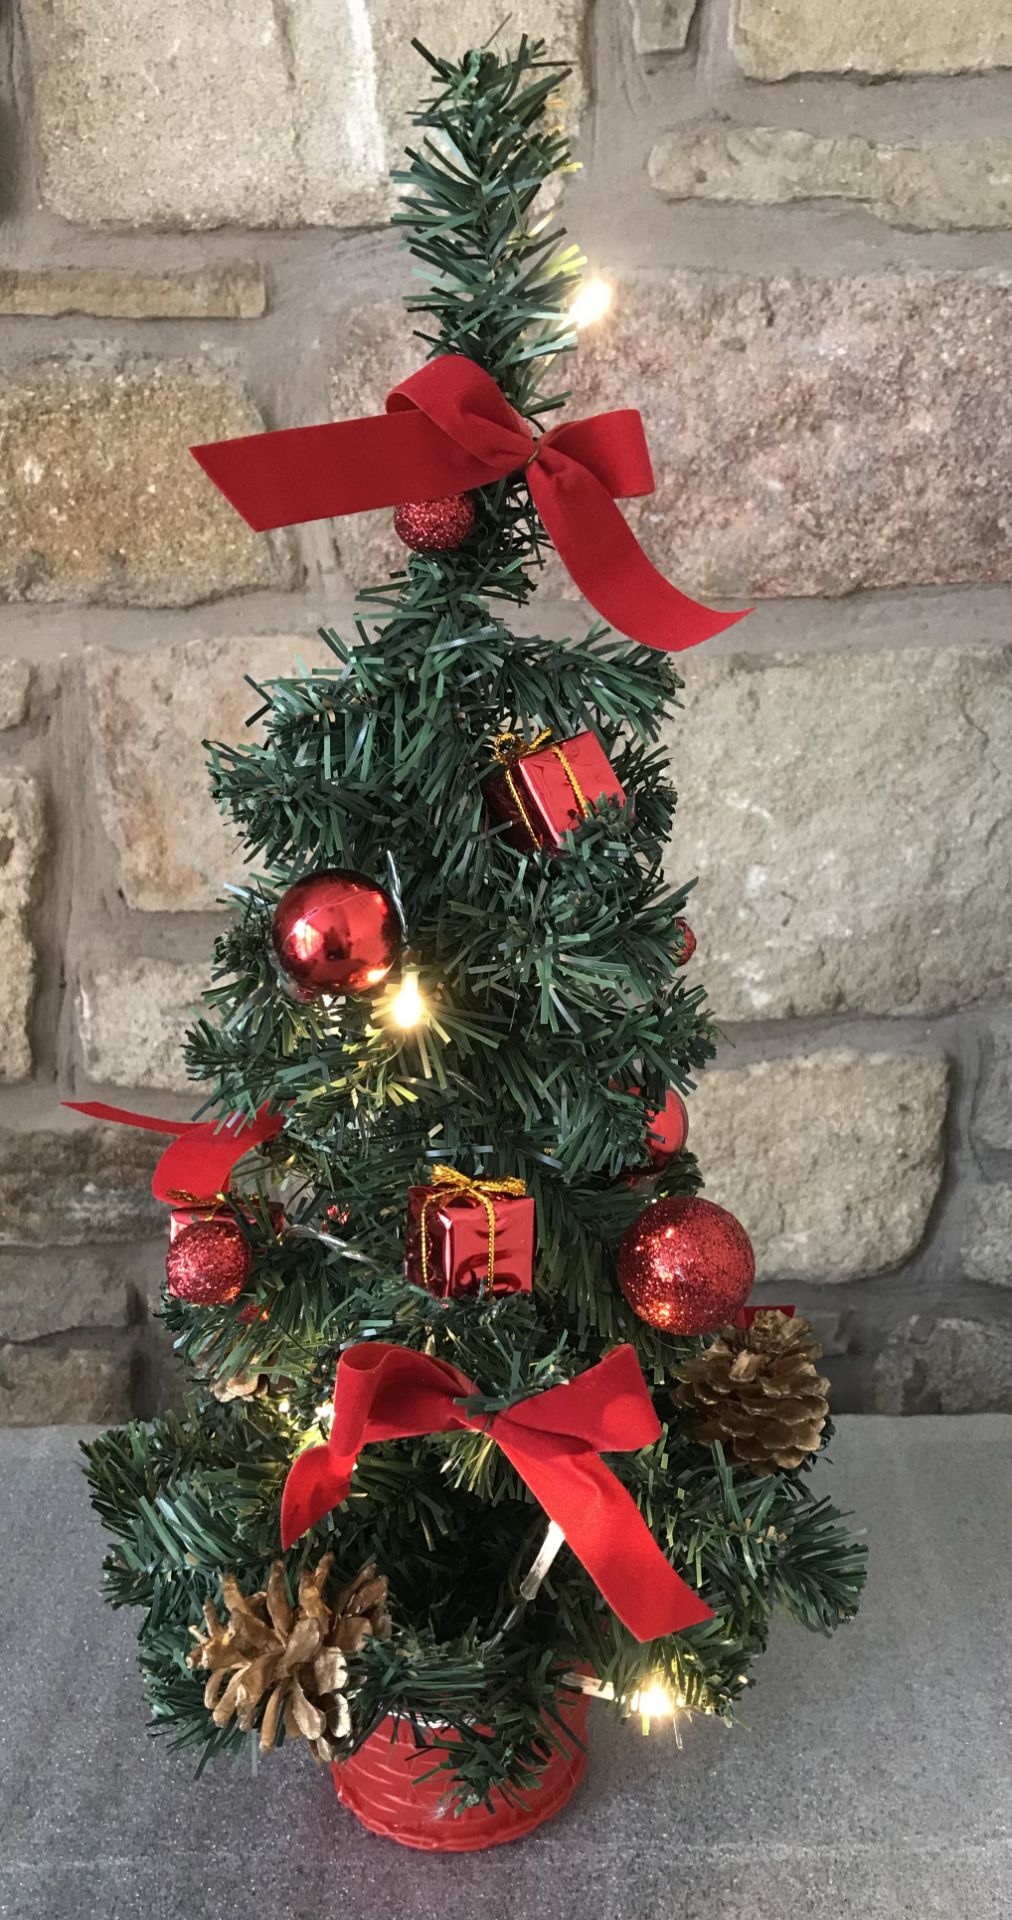 6 x Mini Christmas Trees Decorated - Image 2 of 2